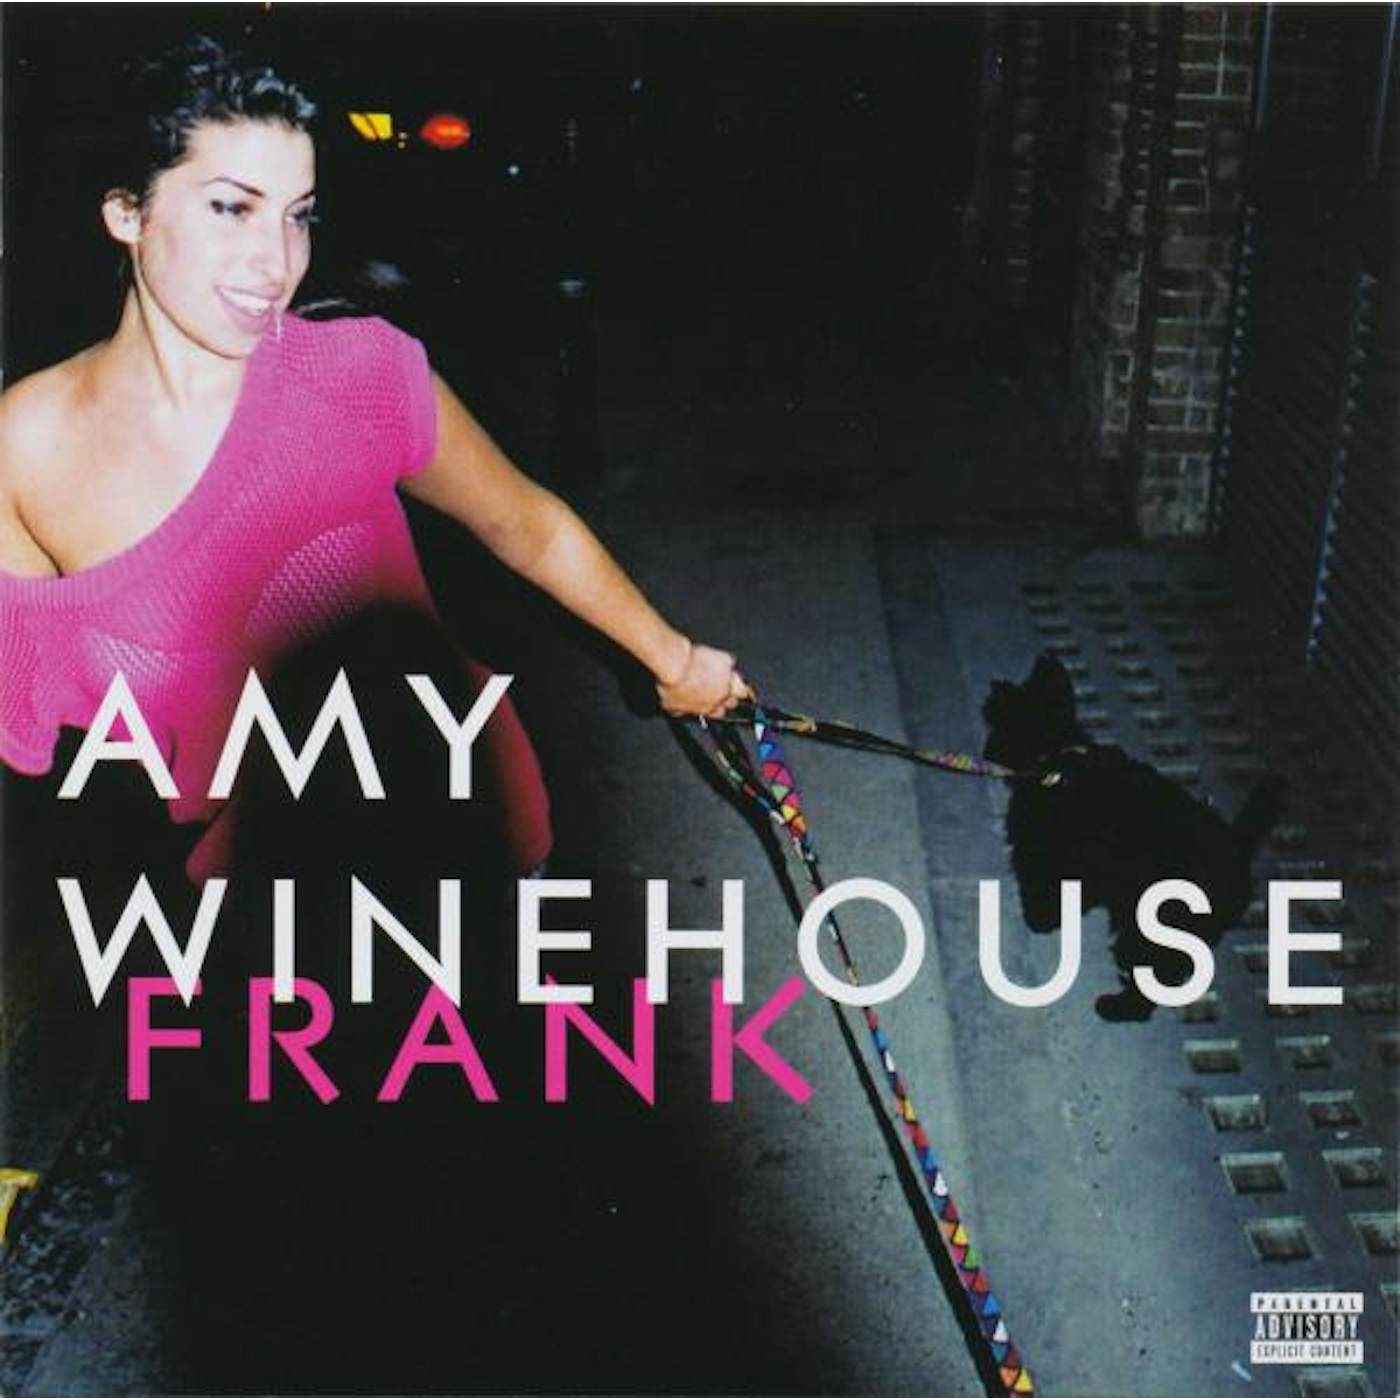 Amy Winehouse FRANK CD